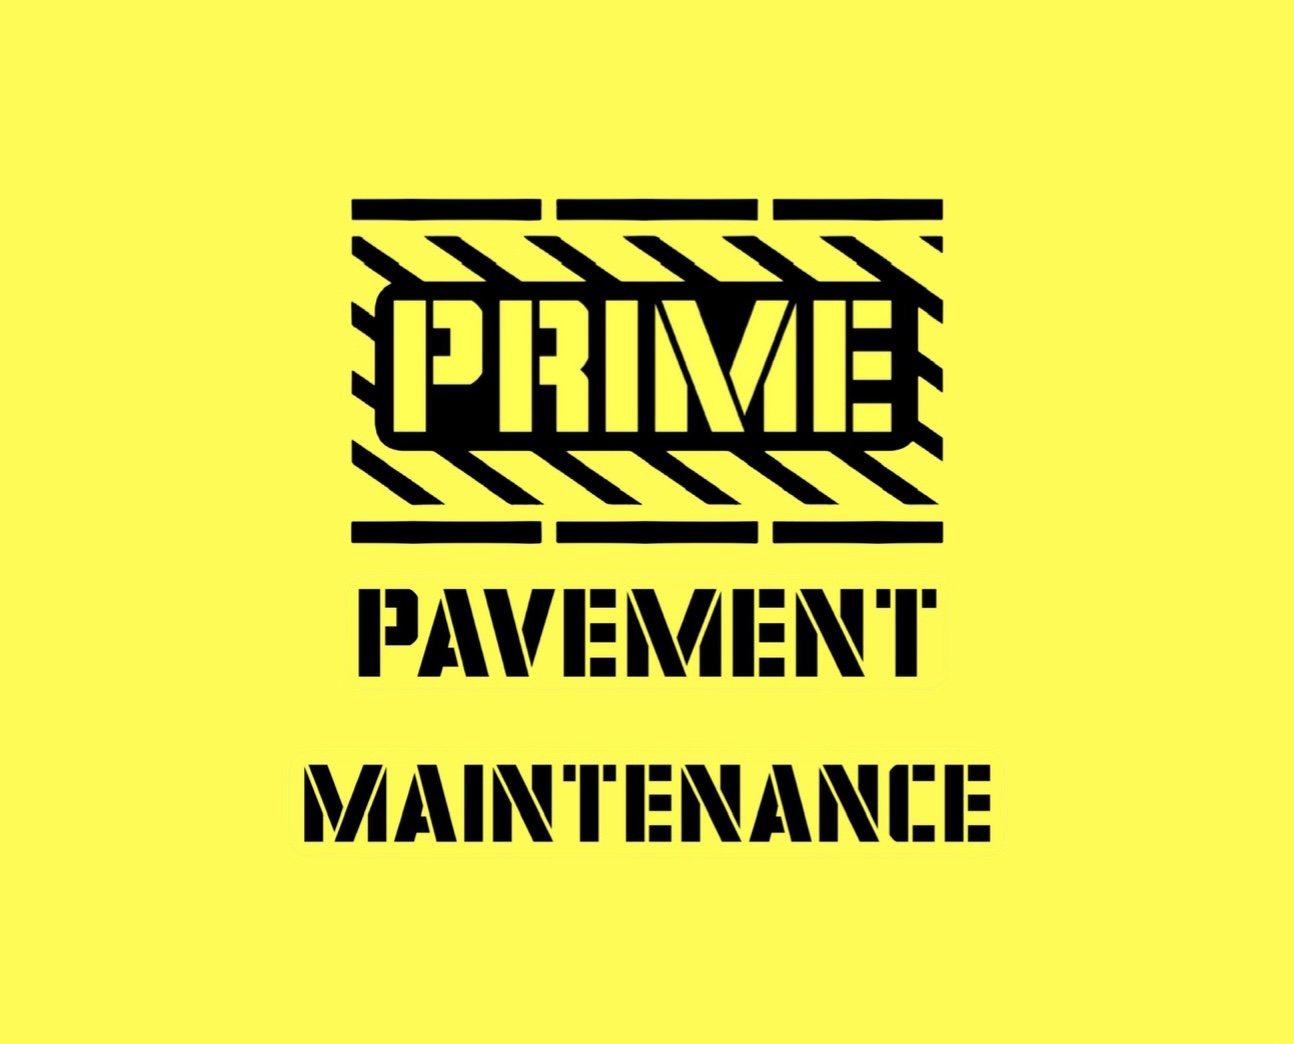 Prime Pavement Maintenance